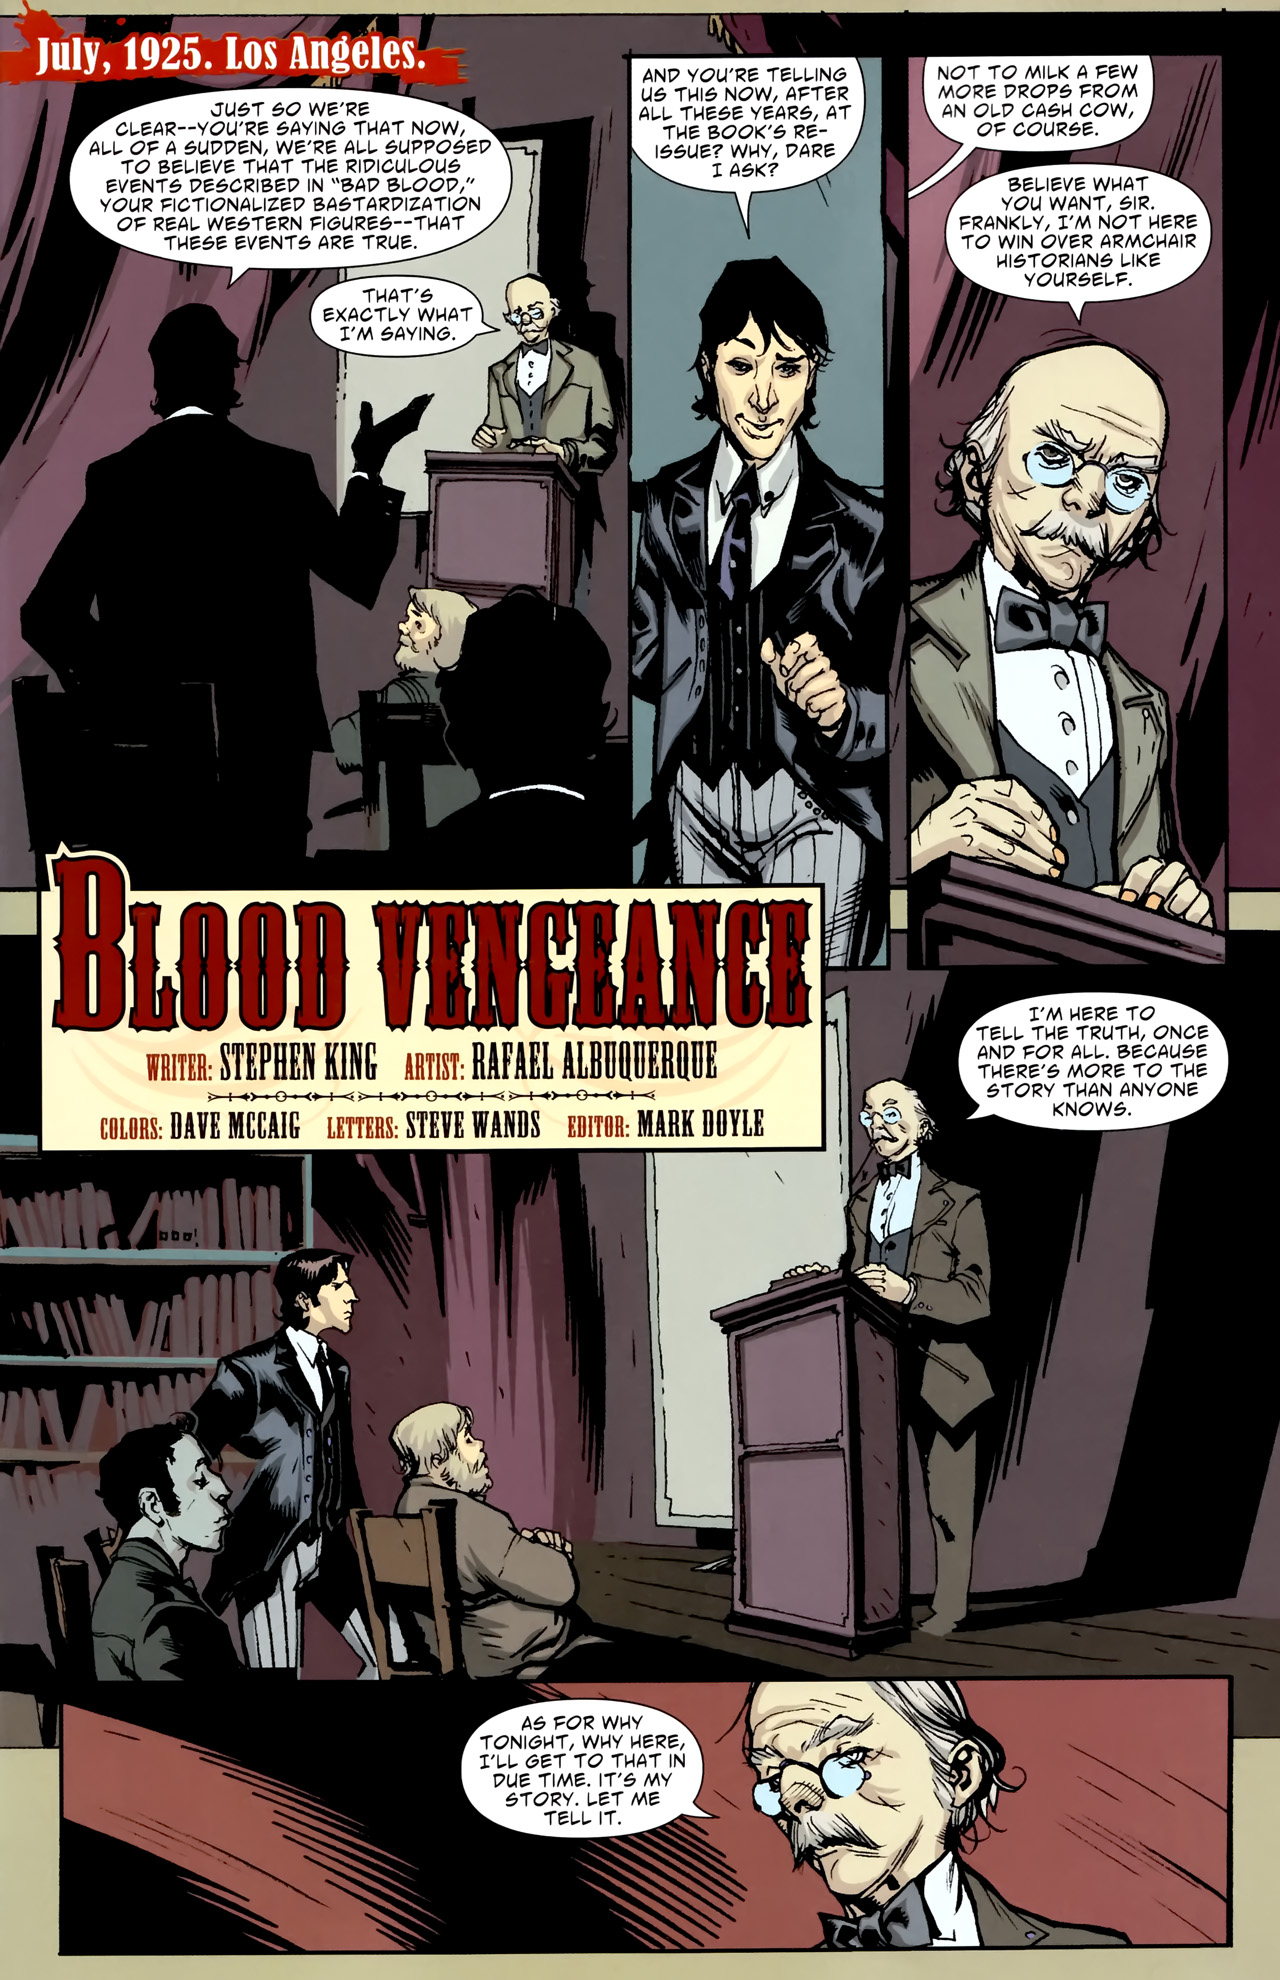 American Vampire #3 - Rough Cut; Blood Vengeance 